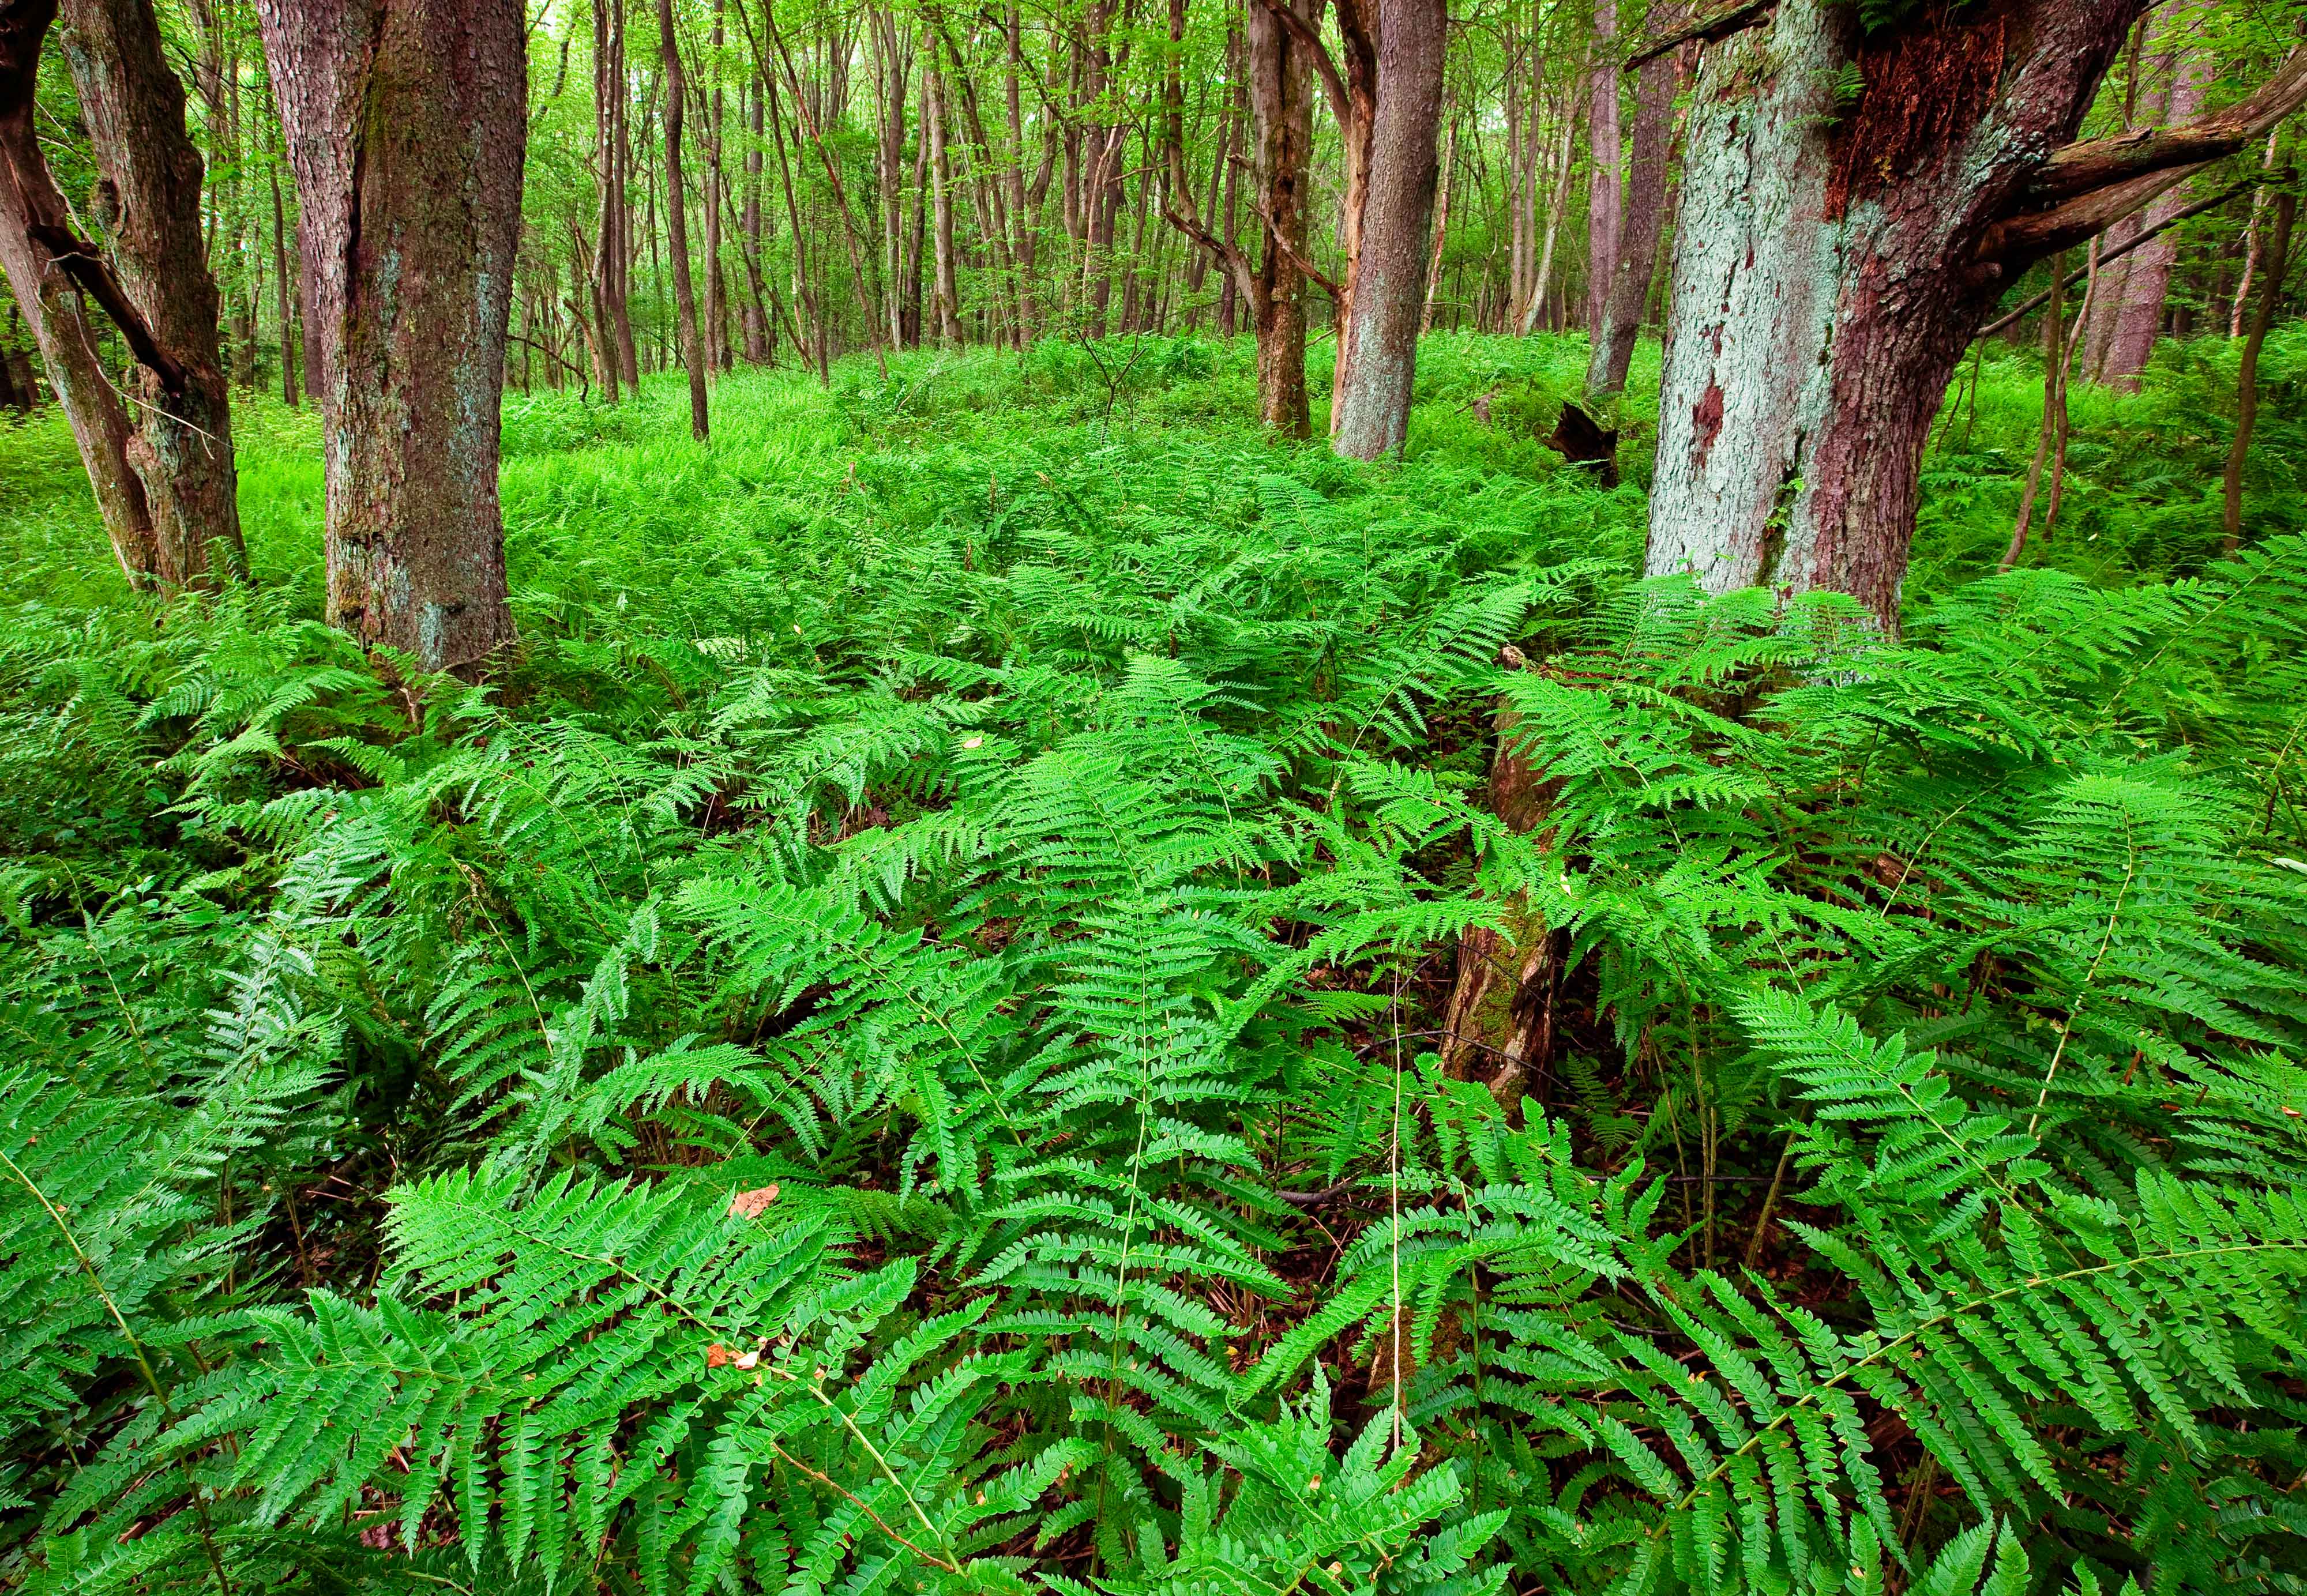 Green ferns blanket a forest.